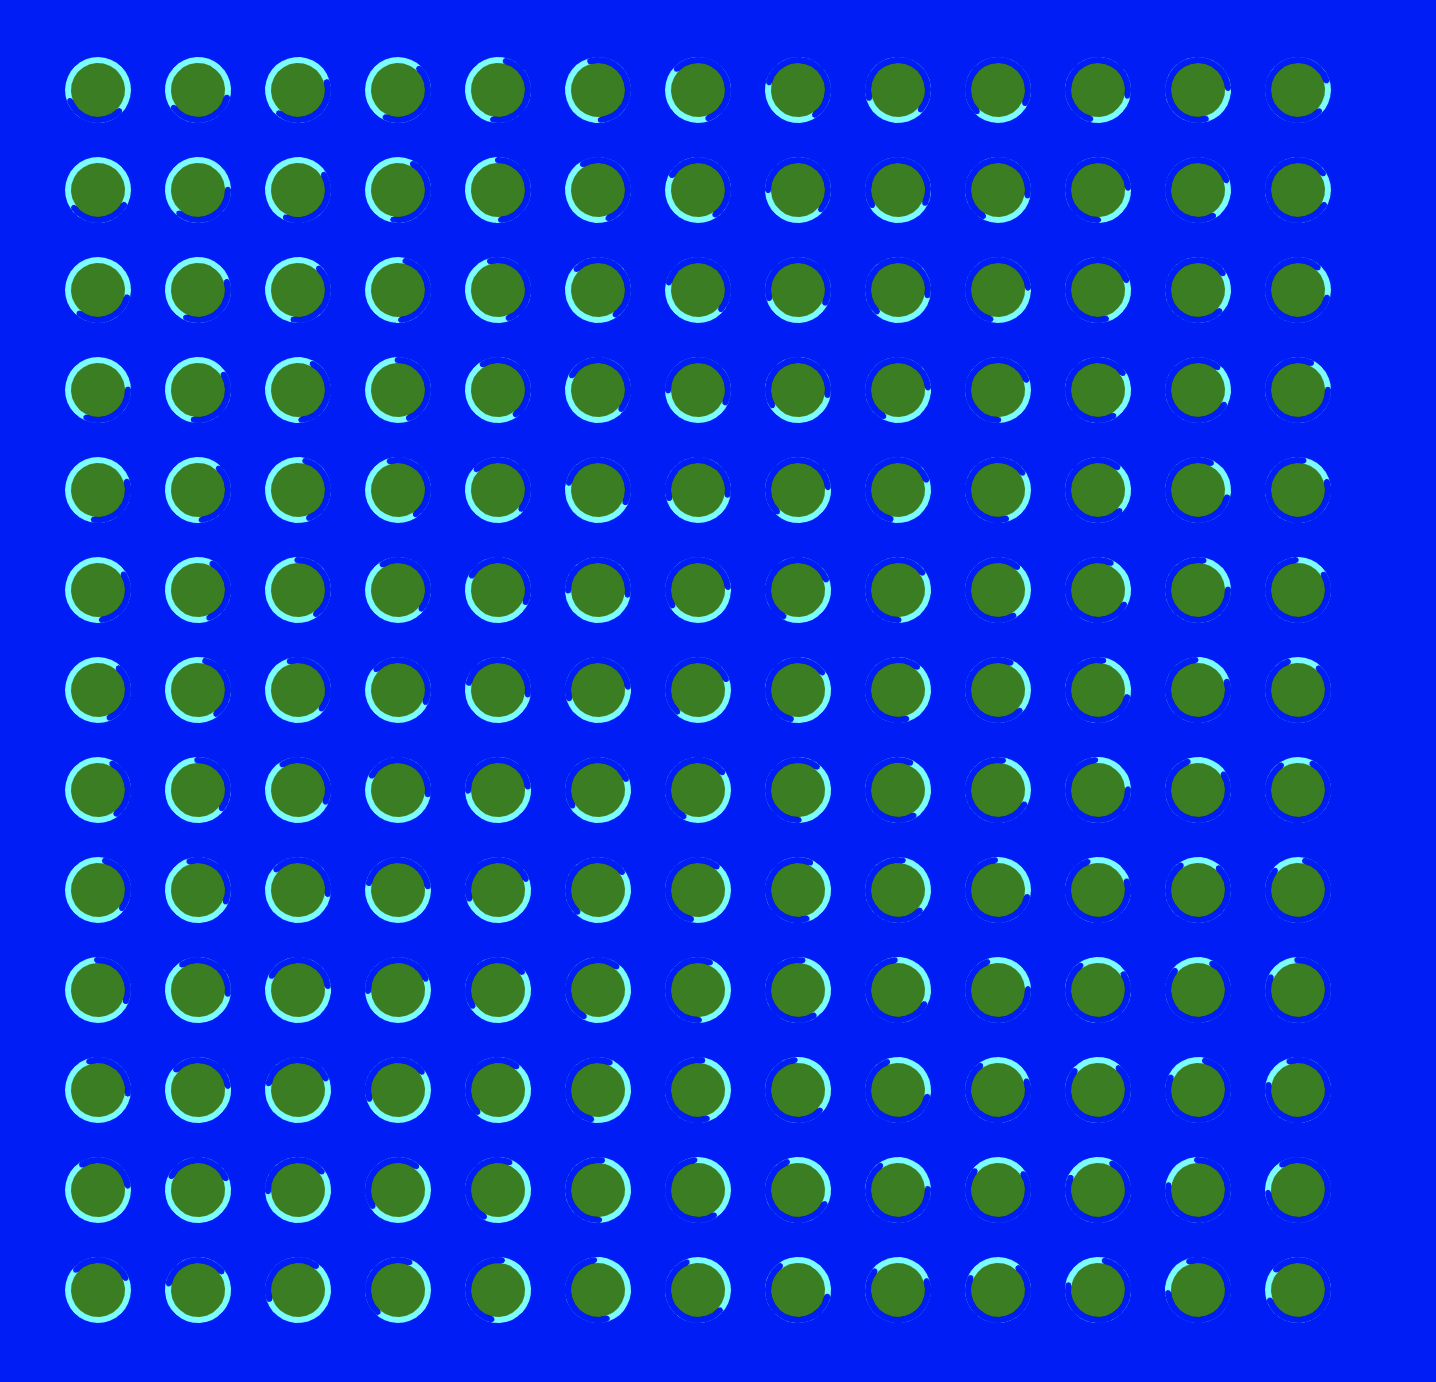 moving dots illlusion